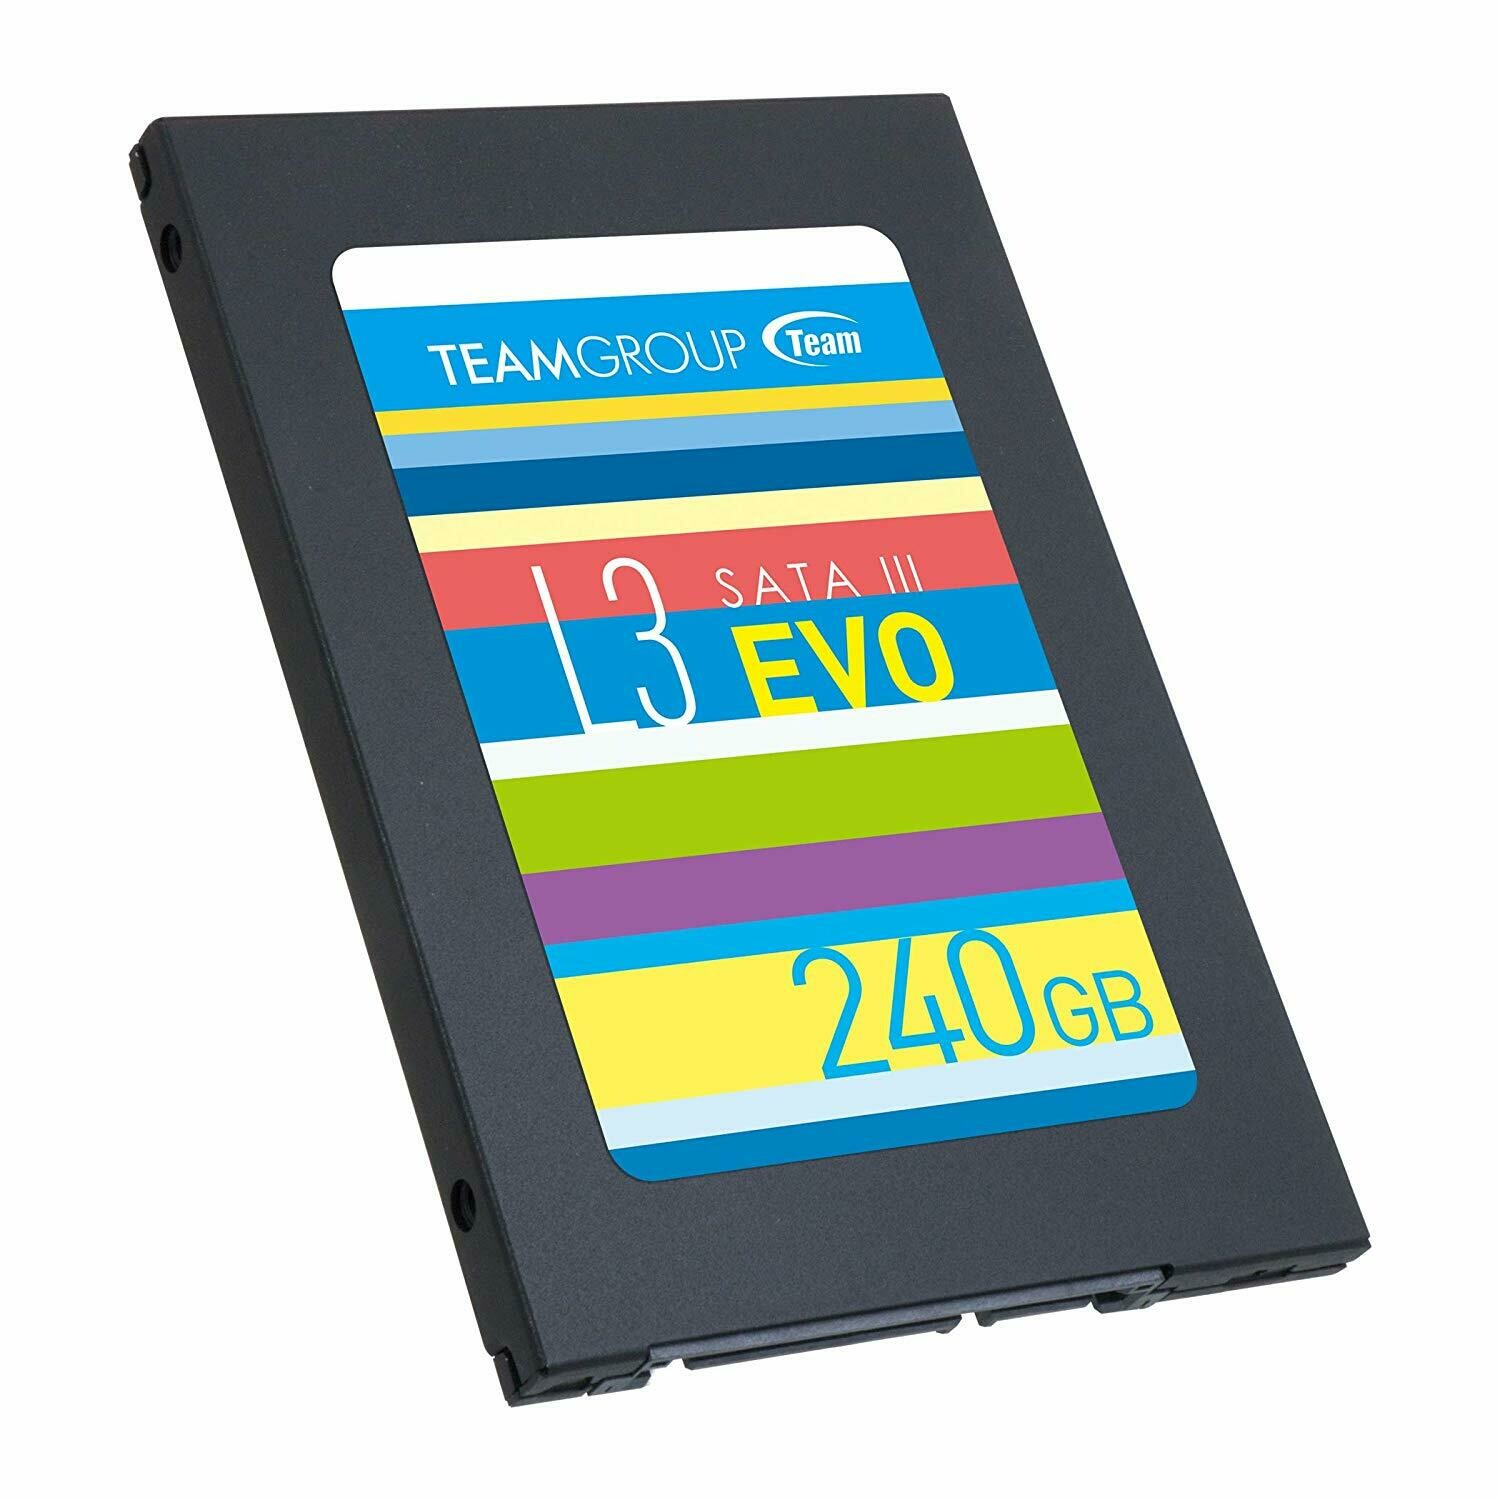 TEAMGROUP 240GB L3 Evo SSD SATA 6G